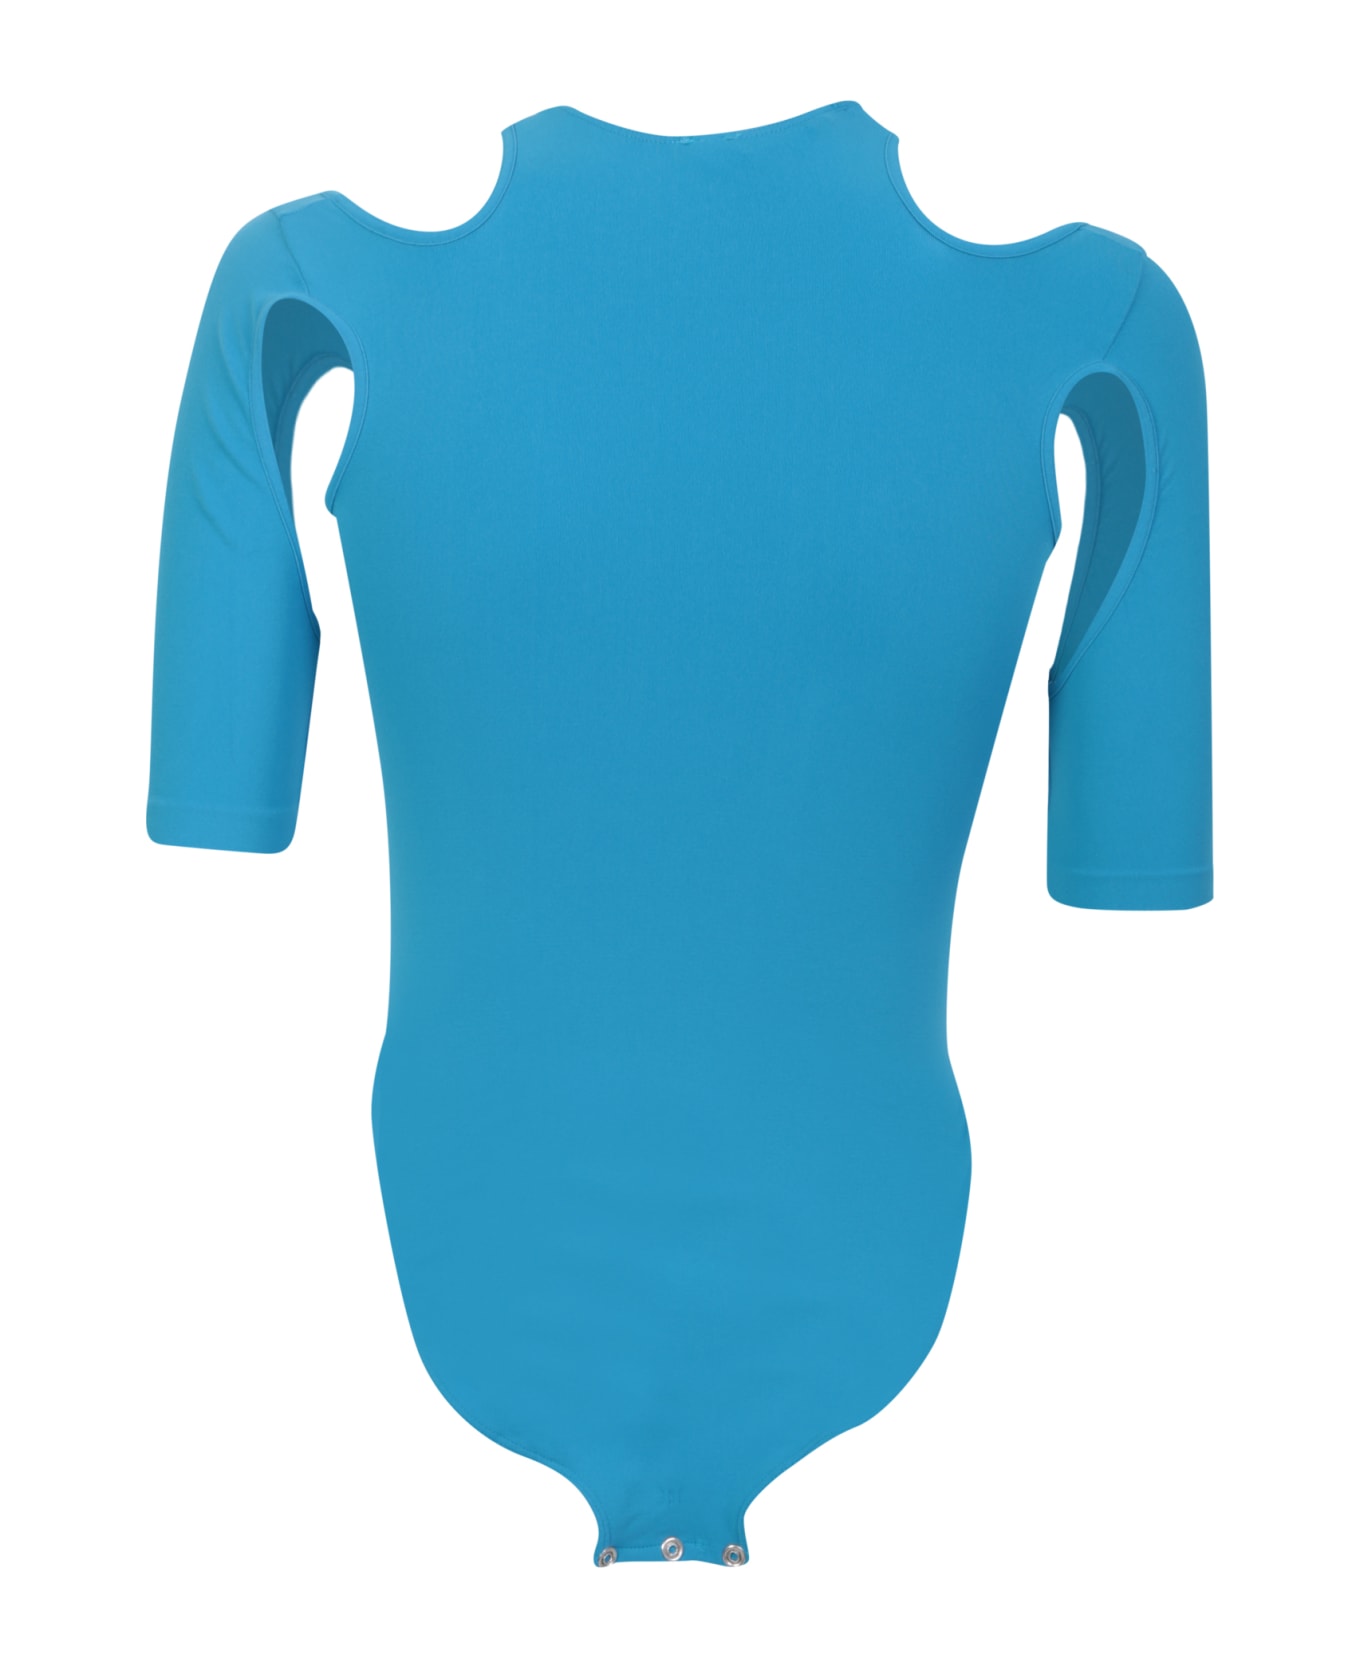 ANDREĀDAMO Jersey Sky Blue Bodysuit - Blue ボディスーツ